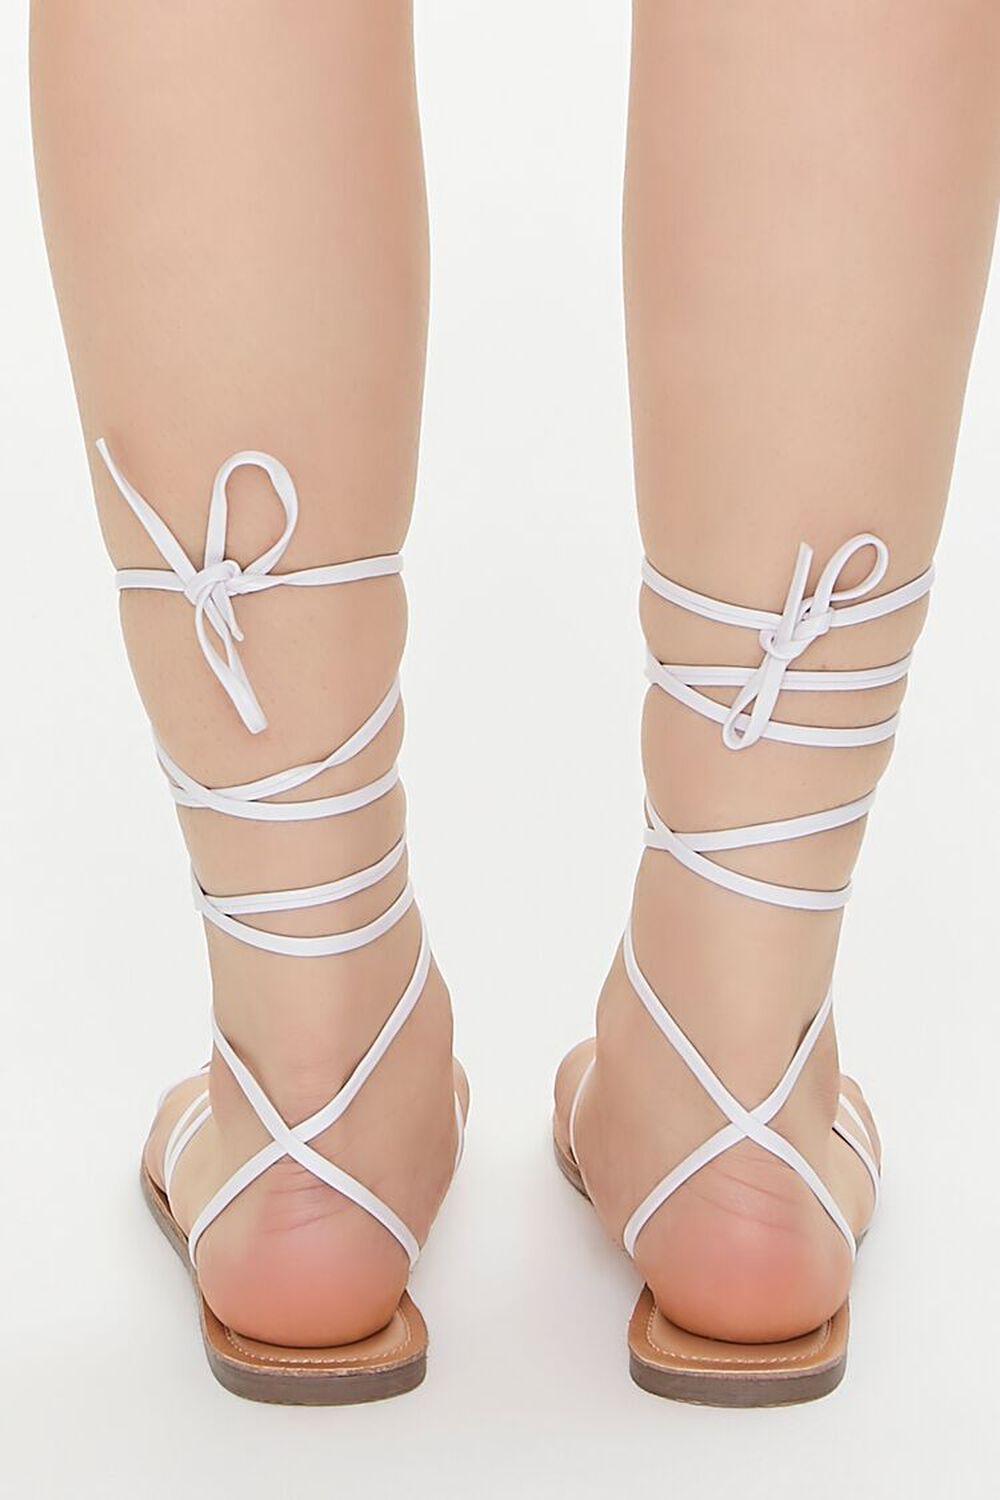 WHITE Lace-Up Gladiator Sandals, image 3